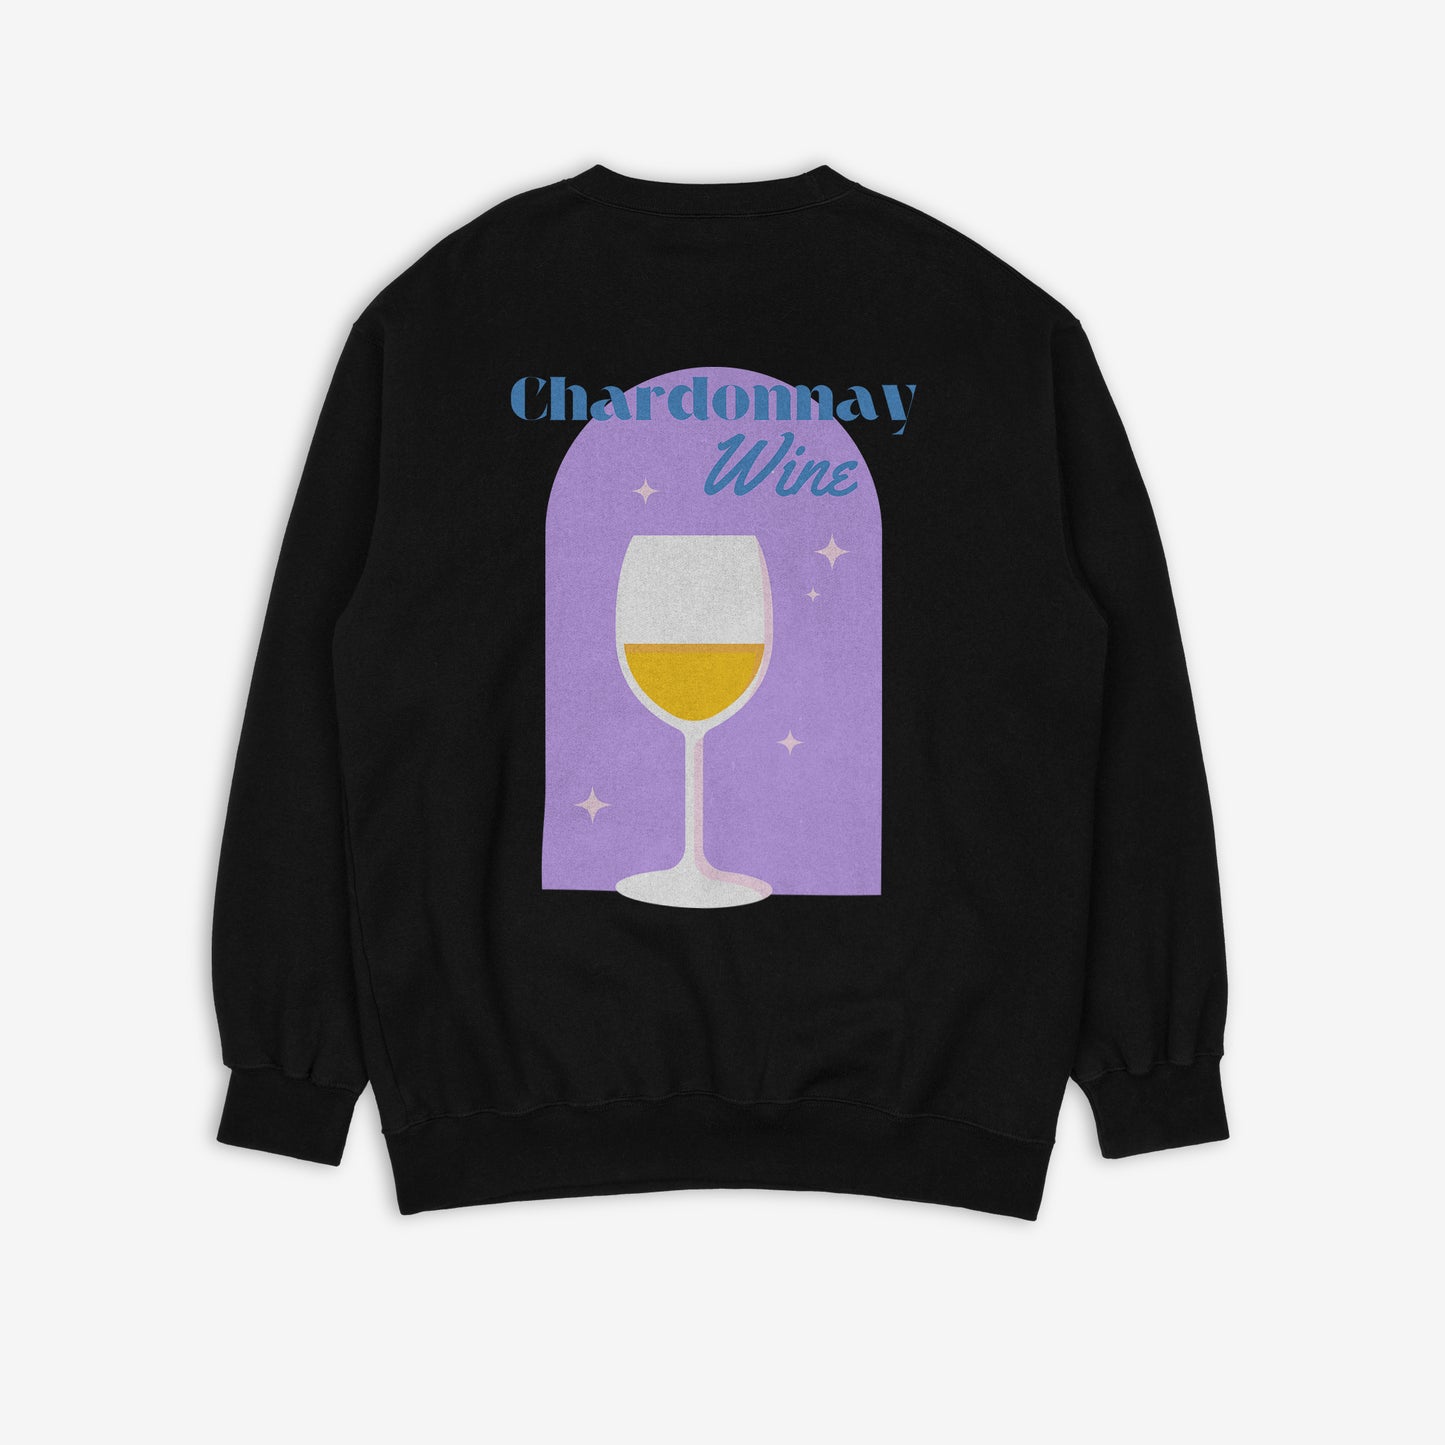 Chardonnay Sweatshirt